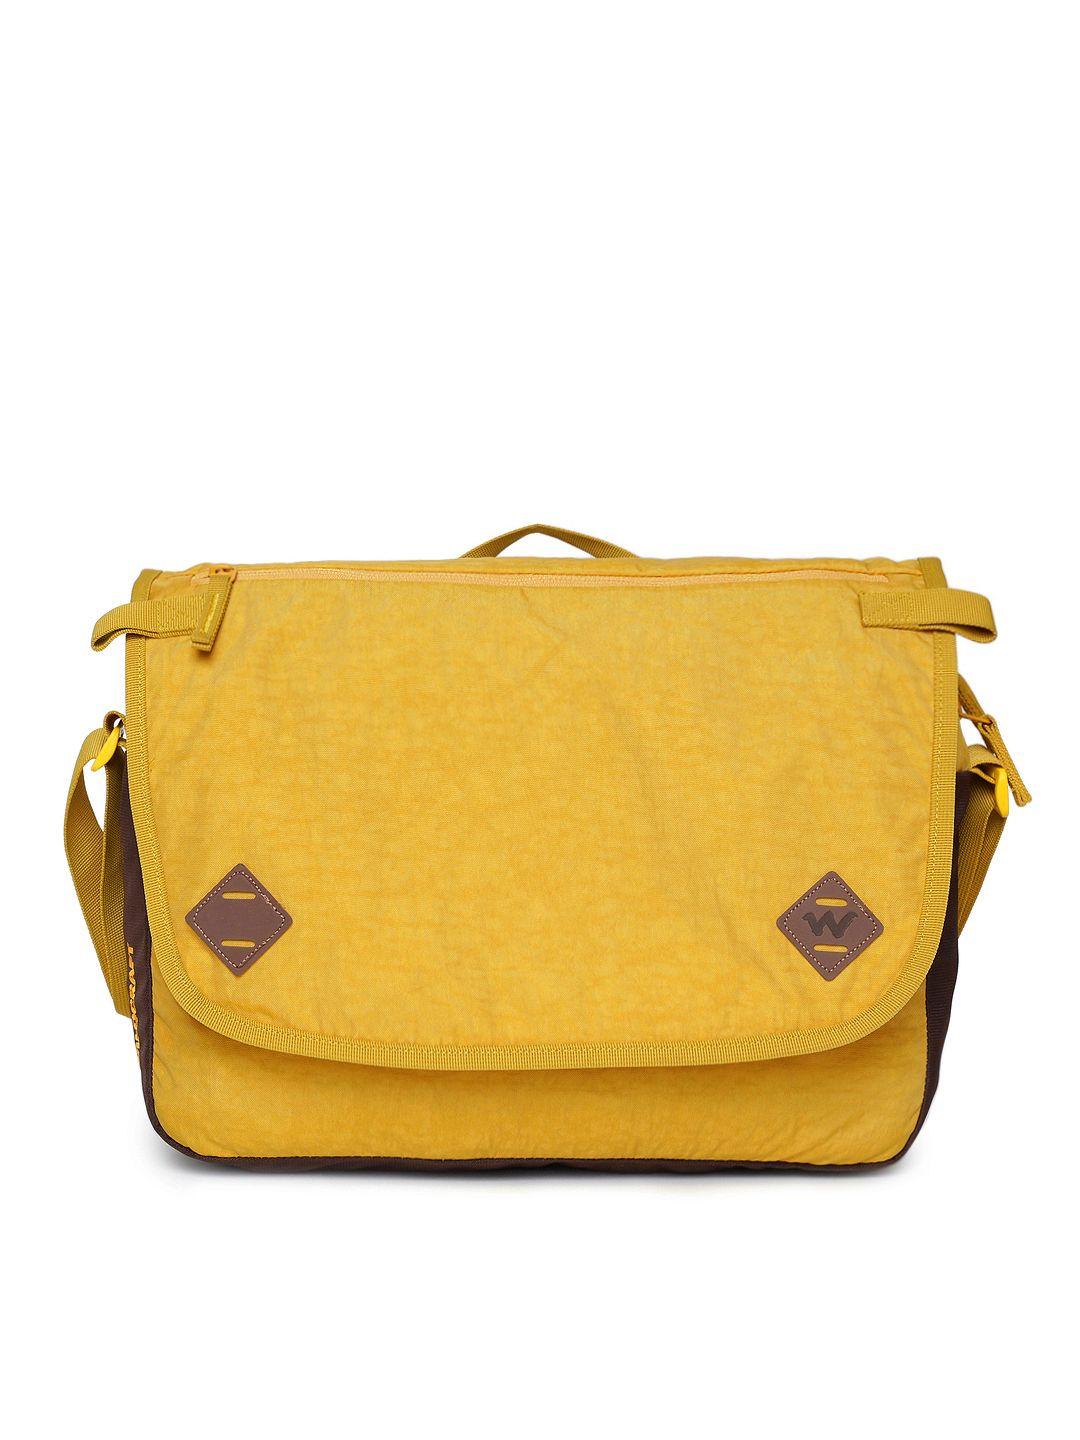 wildcraft unisex mustard yellow solid messenger bag